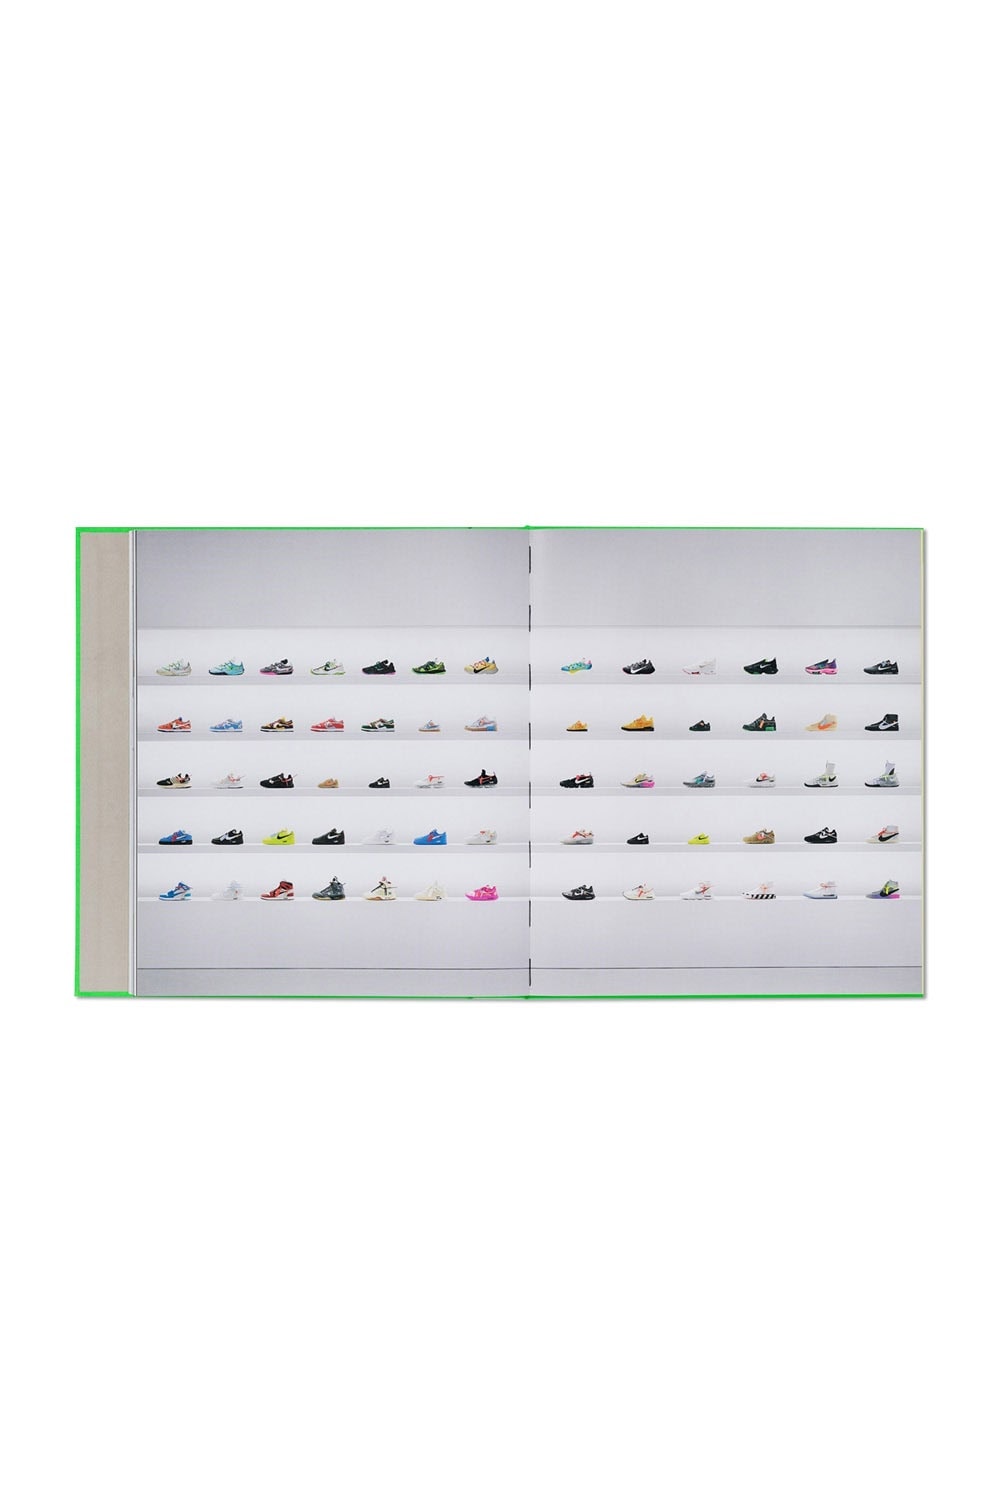 Nike x Virgil Abloh 聯乘鞋履精裝書籍《ICONS》上架情報